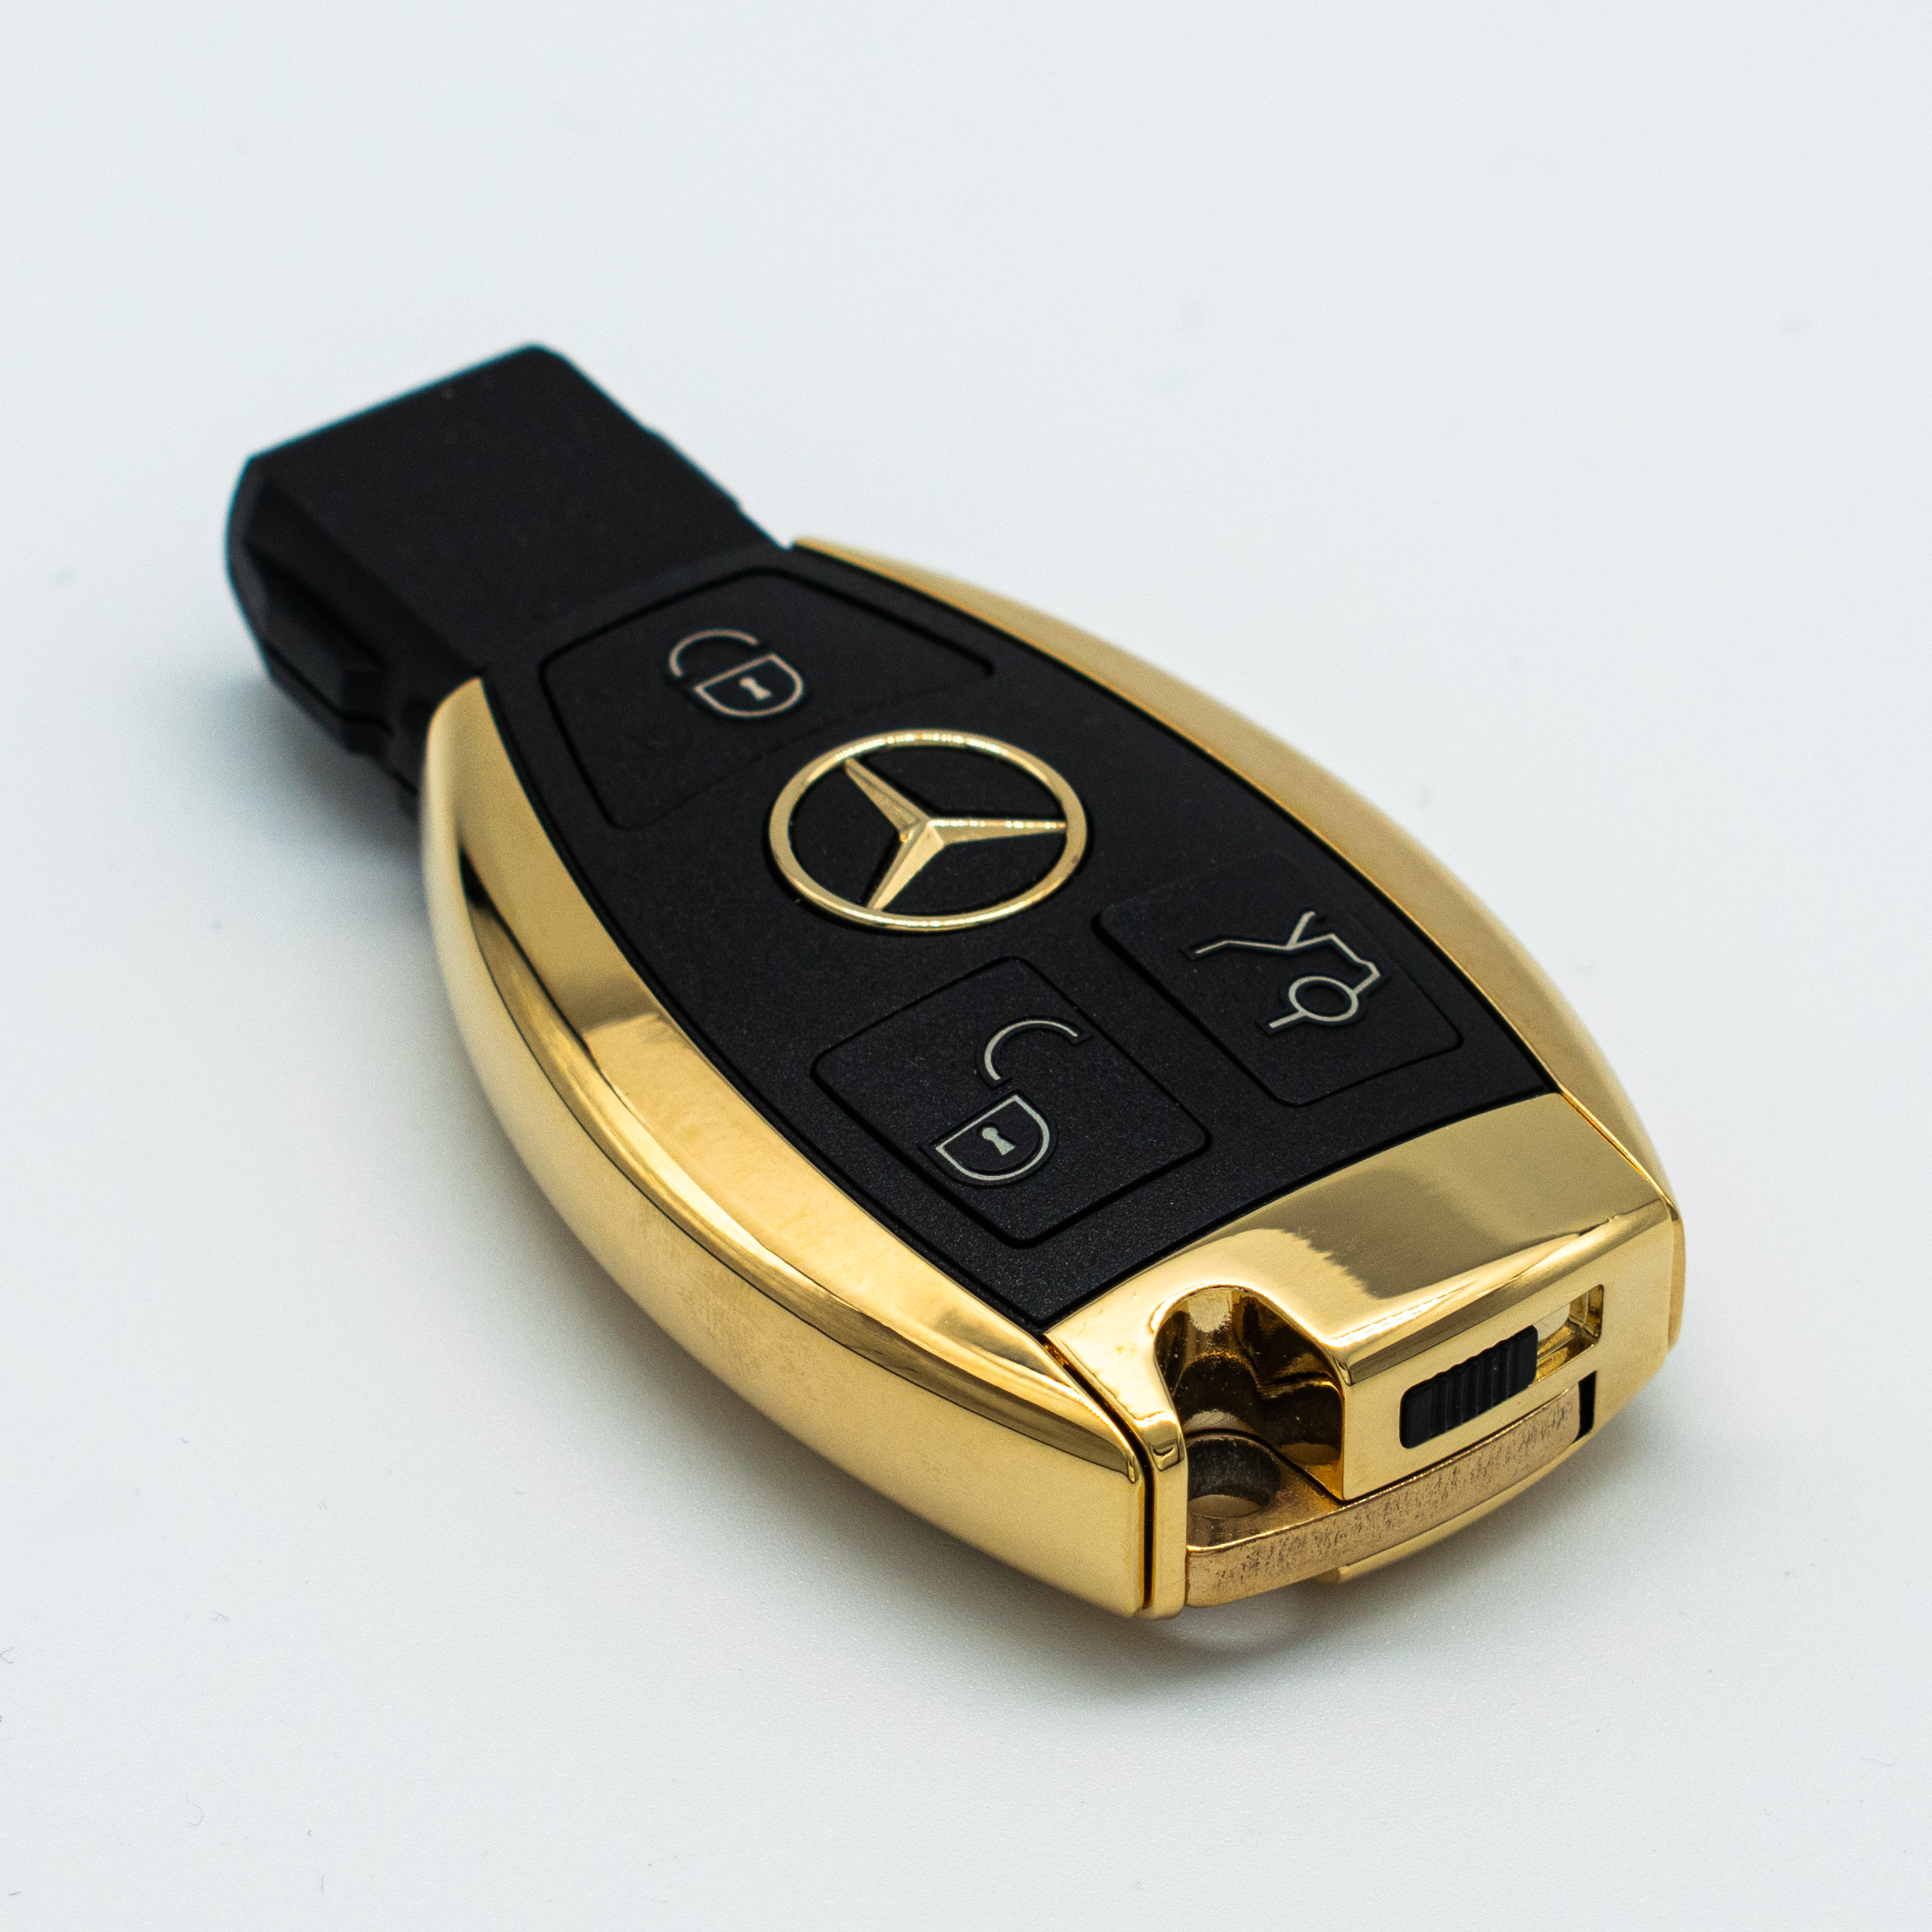 Bilder vergoldet Mercedes Schlüssel vergolden lassen DARK Galvanik